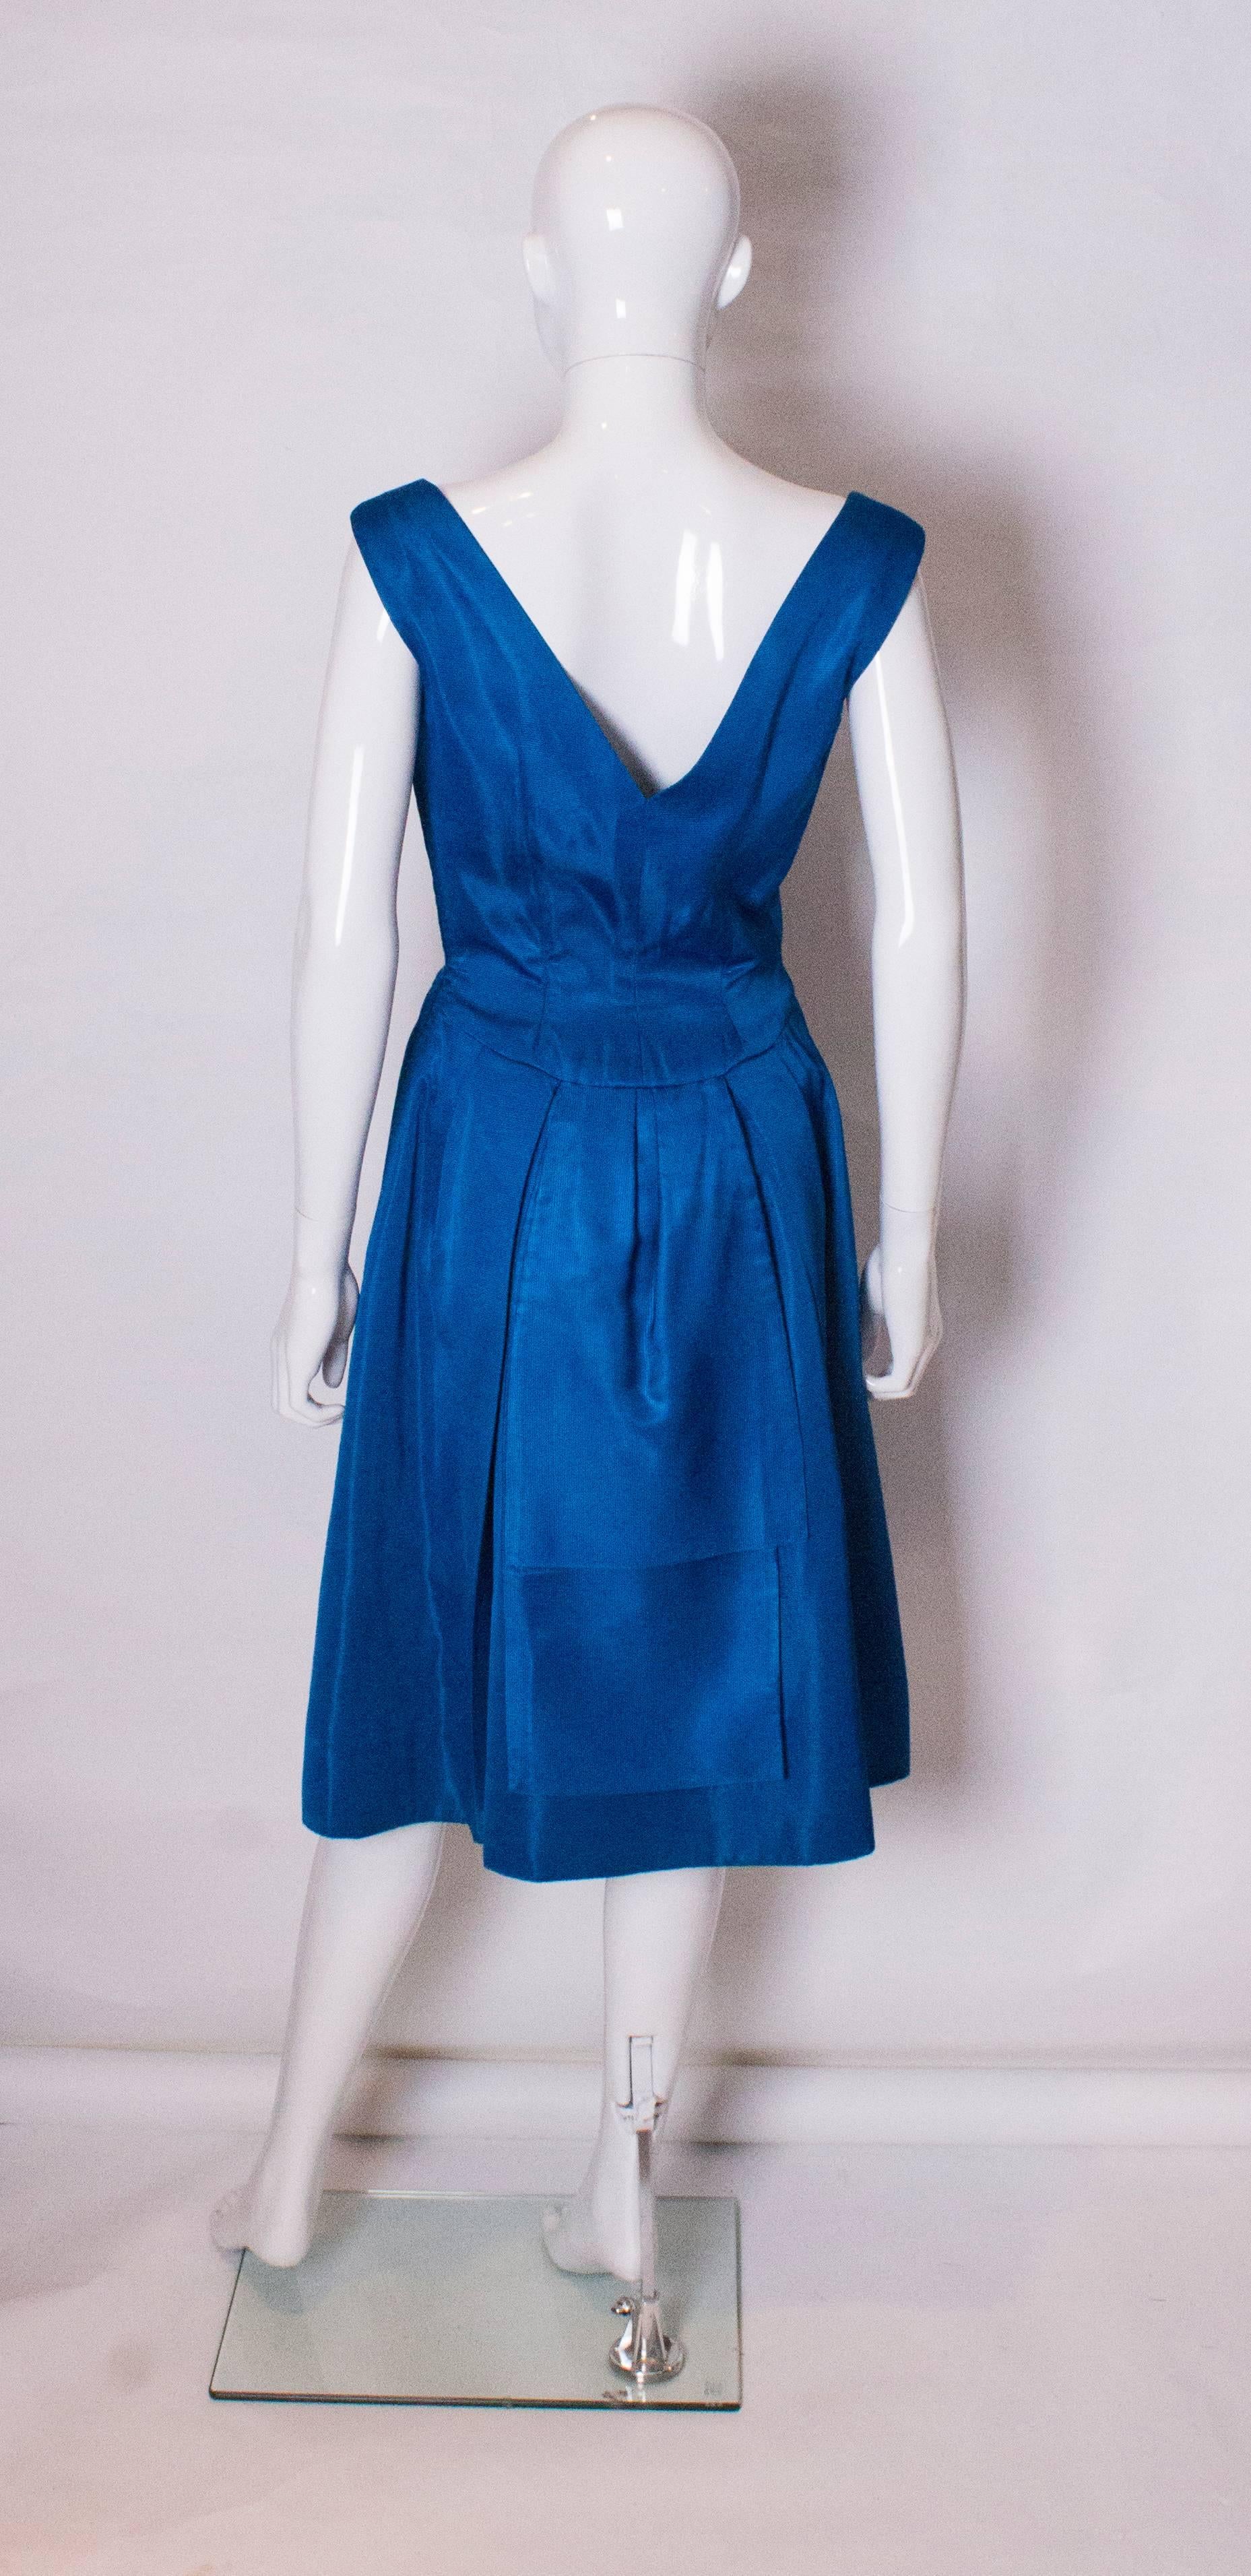 Women's 1950s Blue Cocktail Dress